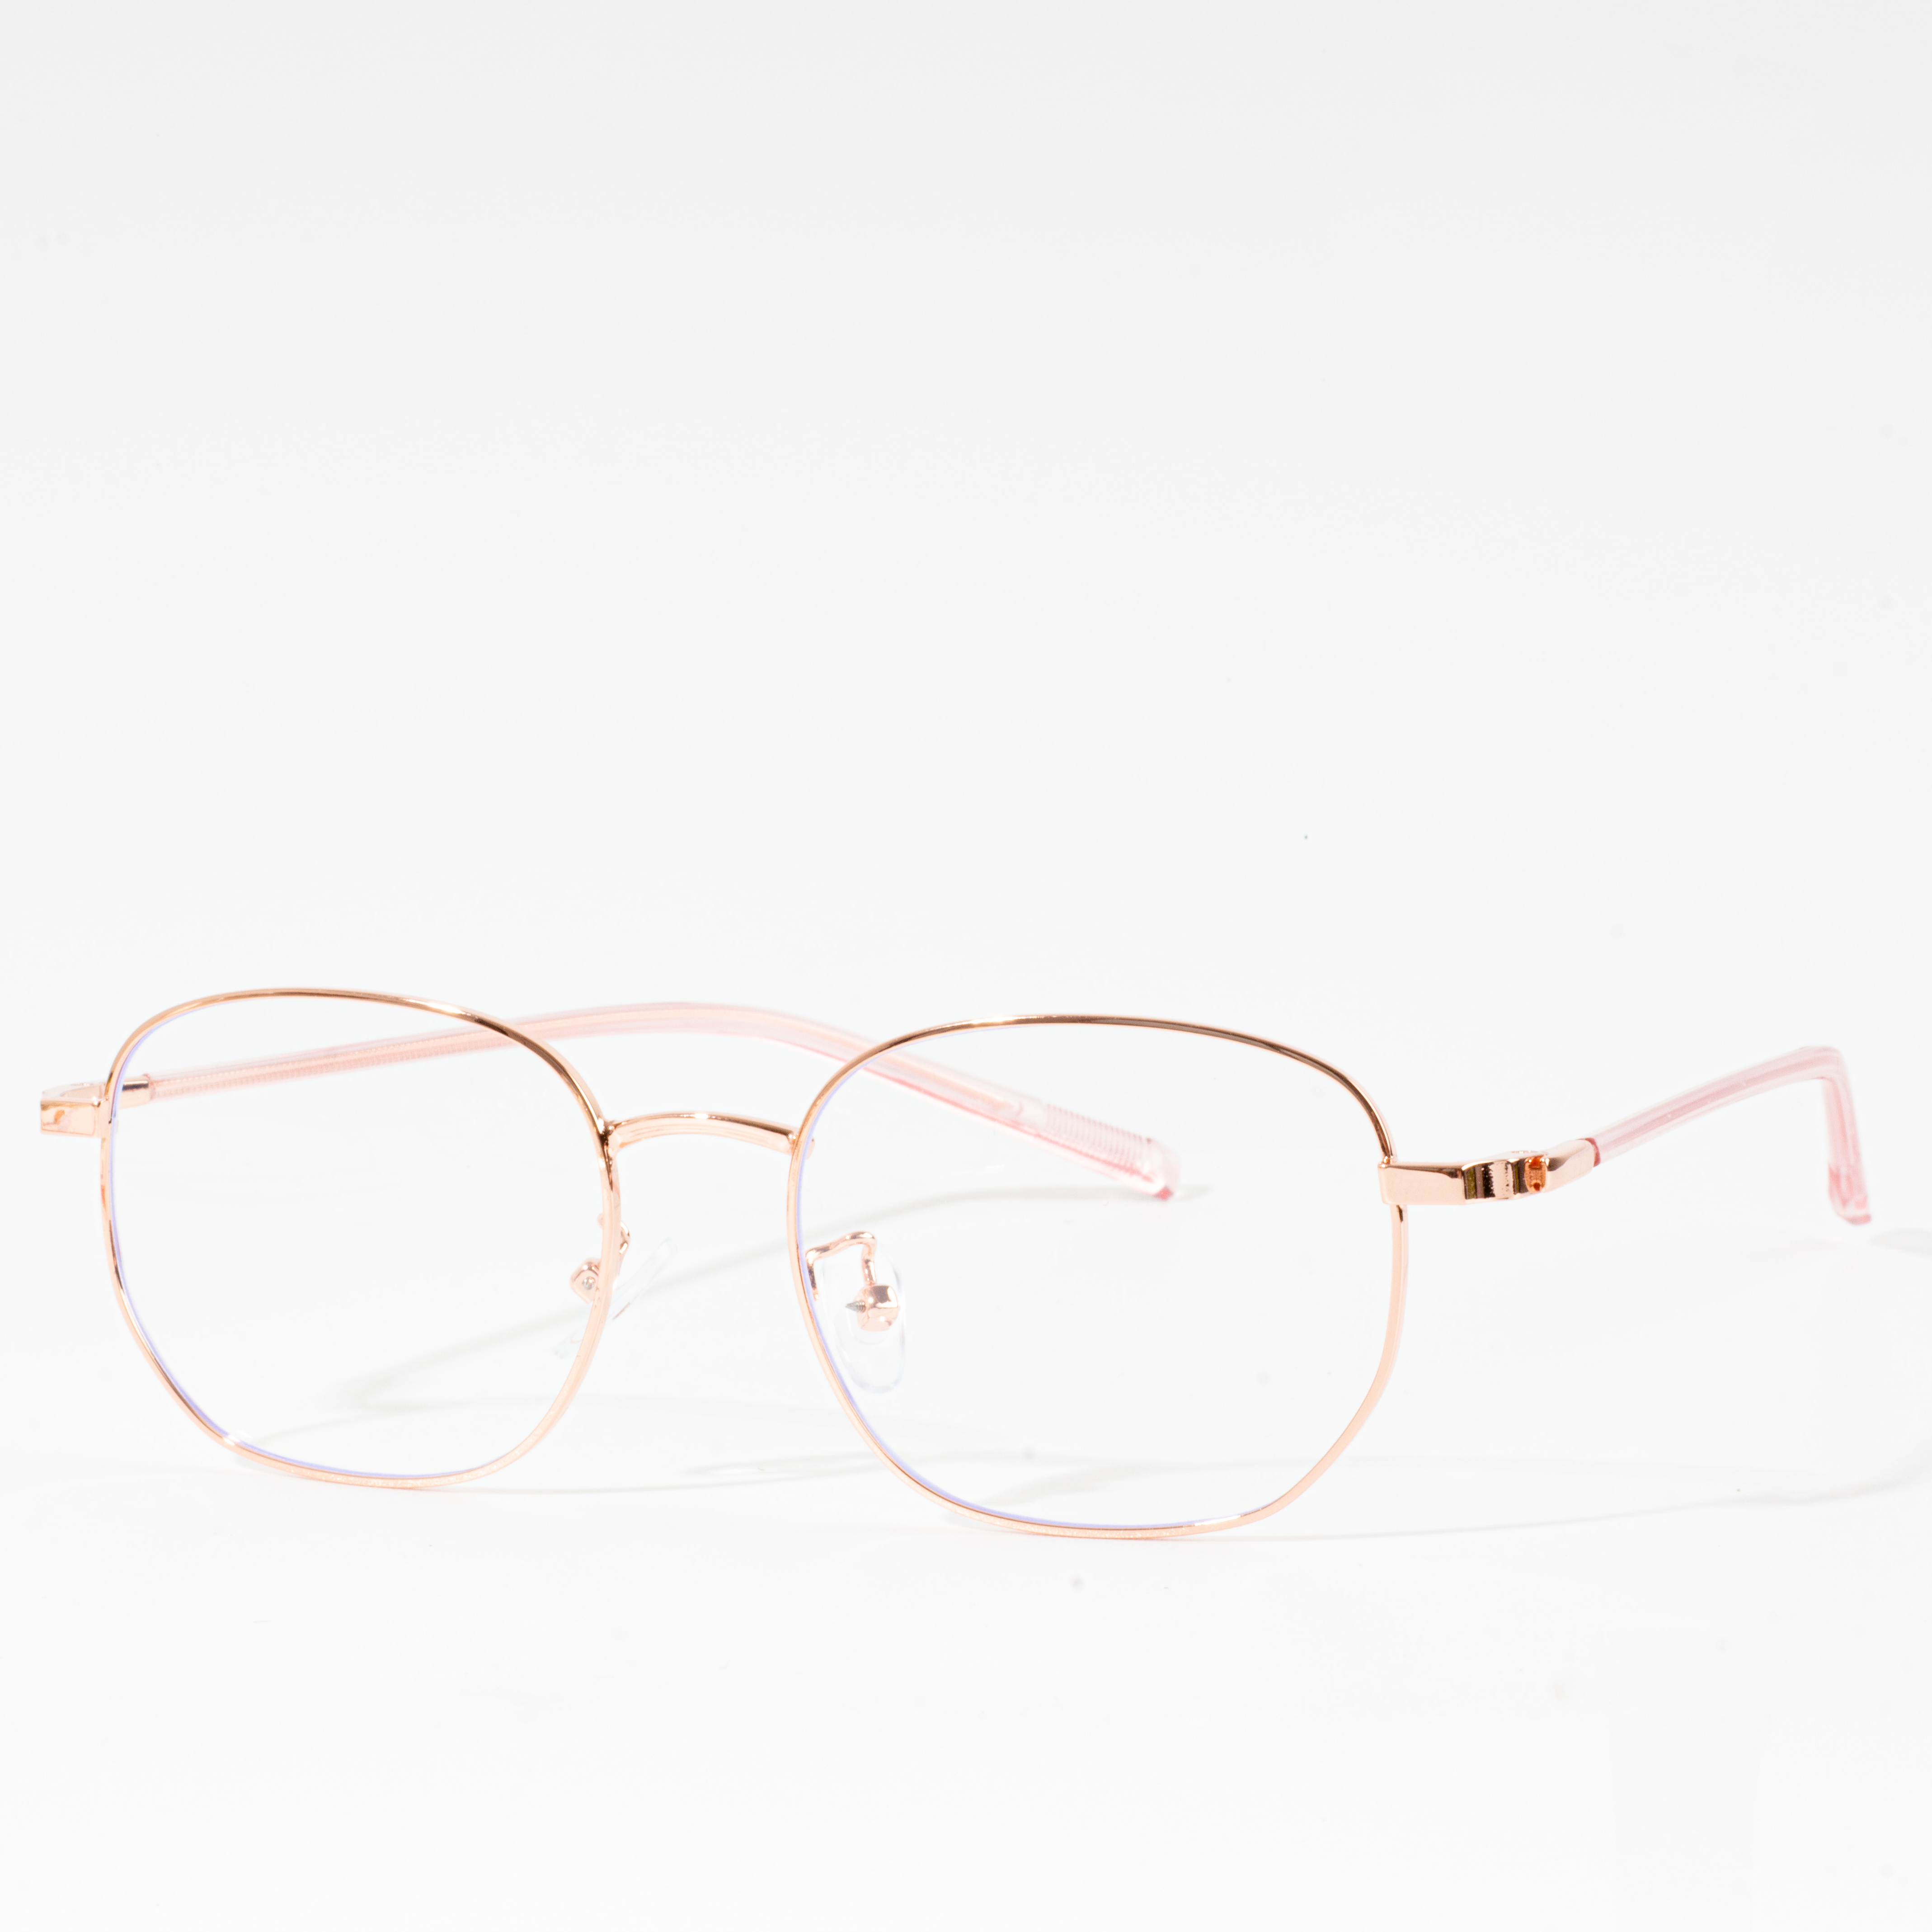 types of eyeglass frames